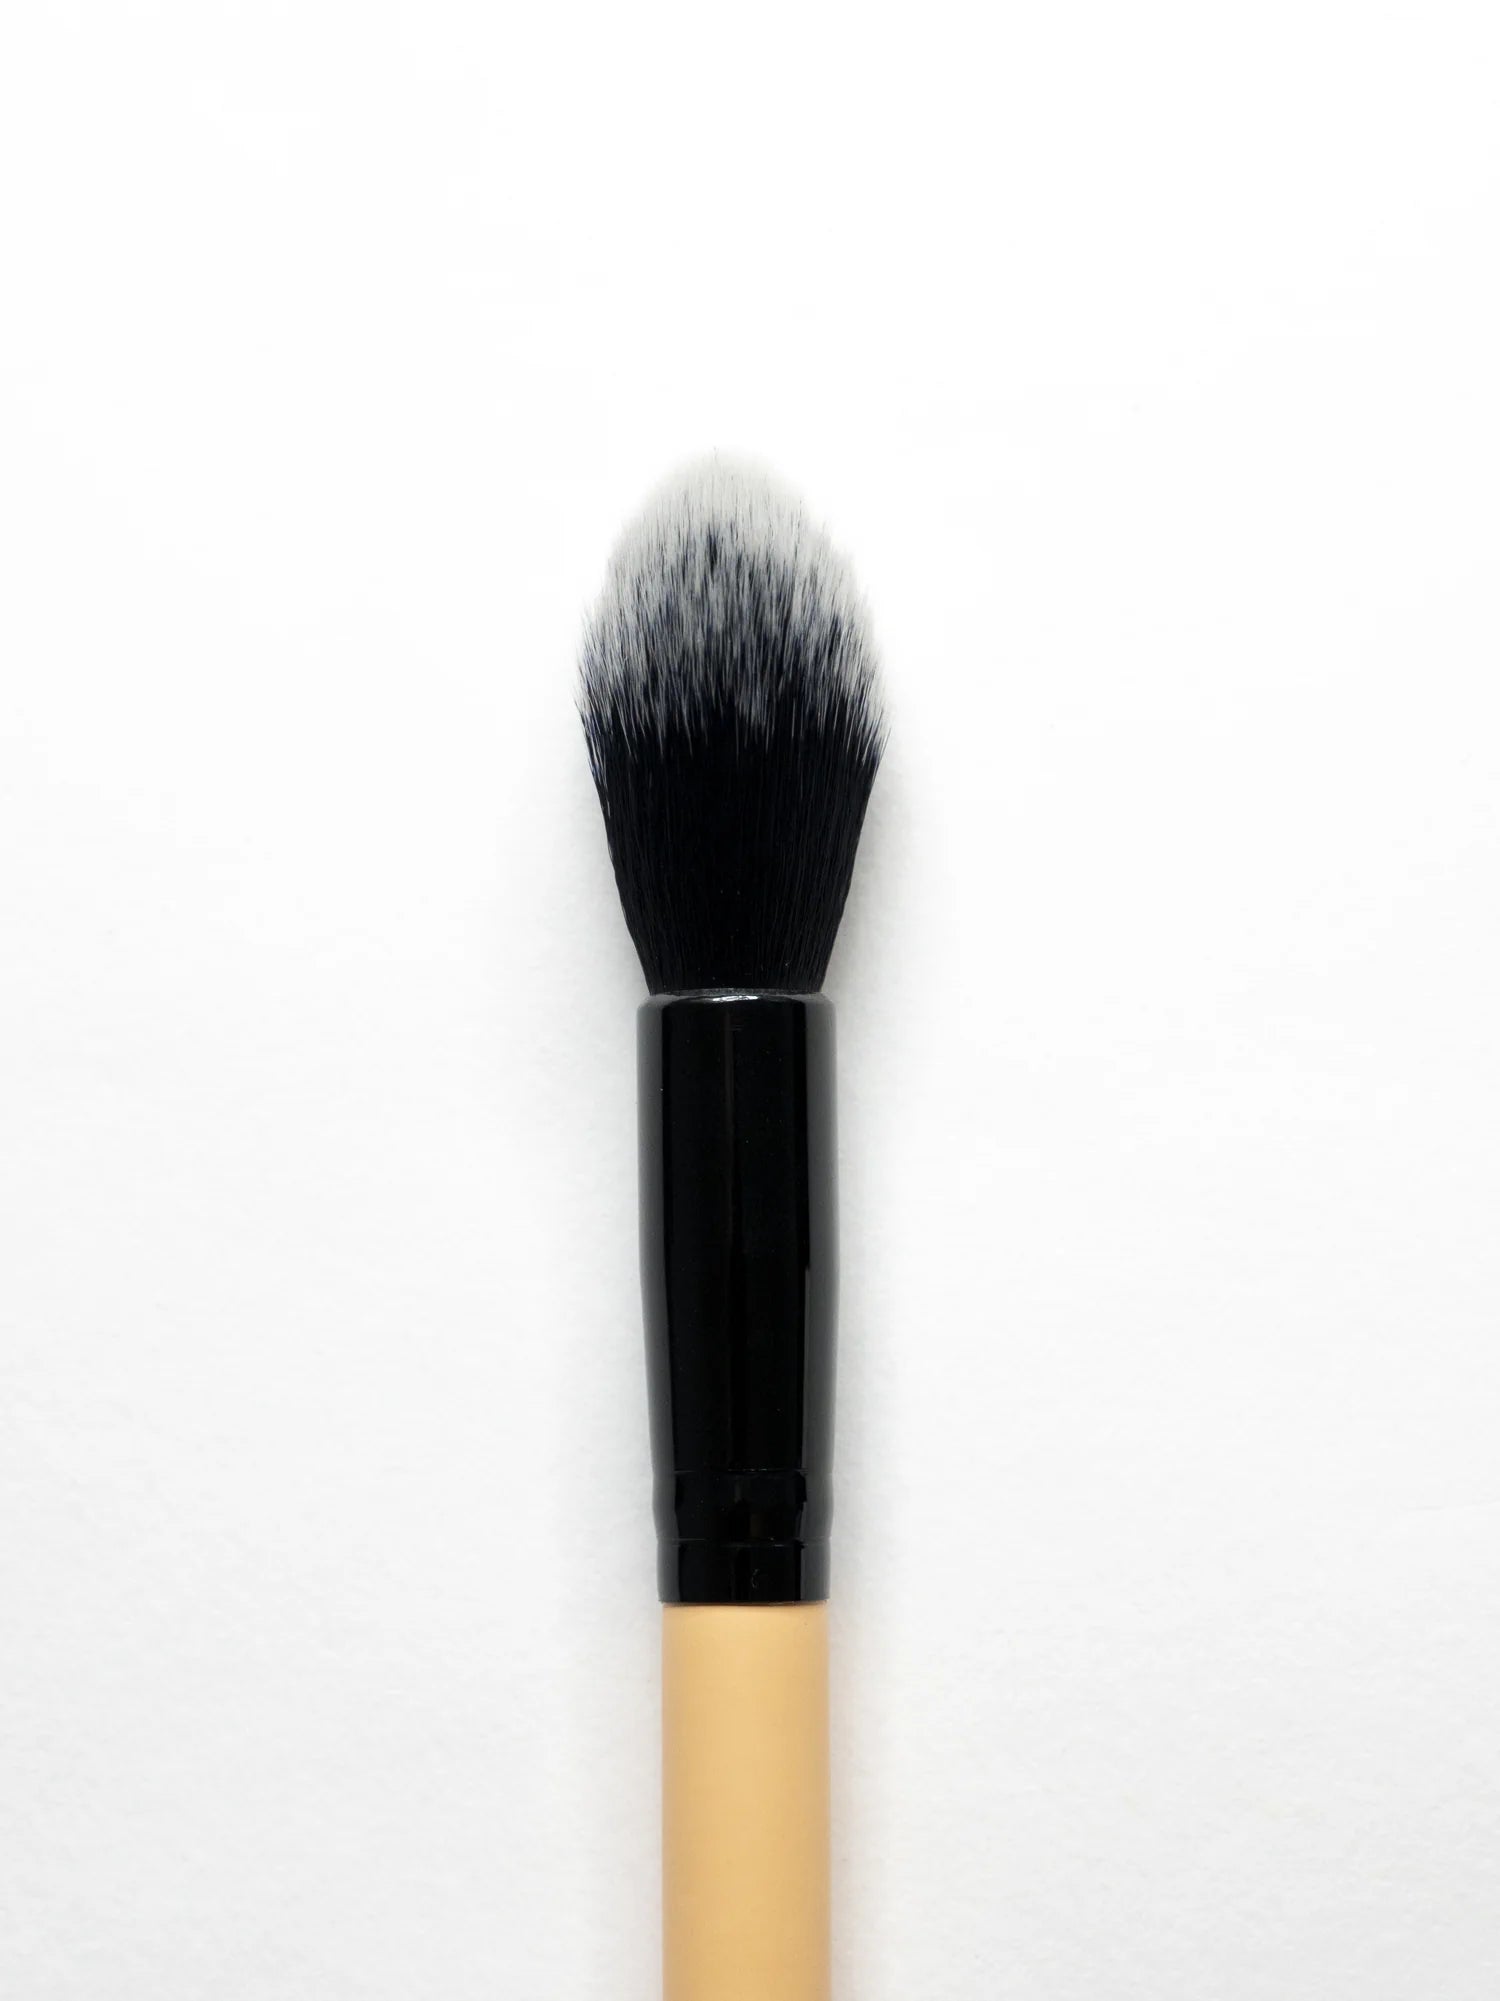 Small Powder Brush 38 Make-up Brush EDY LONDON Pale Pink   - EDY LONDON PRODUCTS UK - The Best Makeup Brushes - shop.edy.london